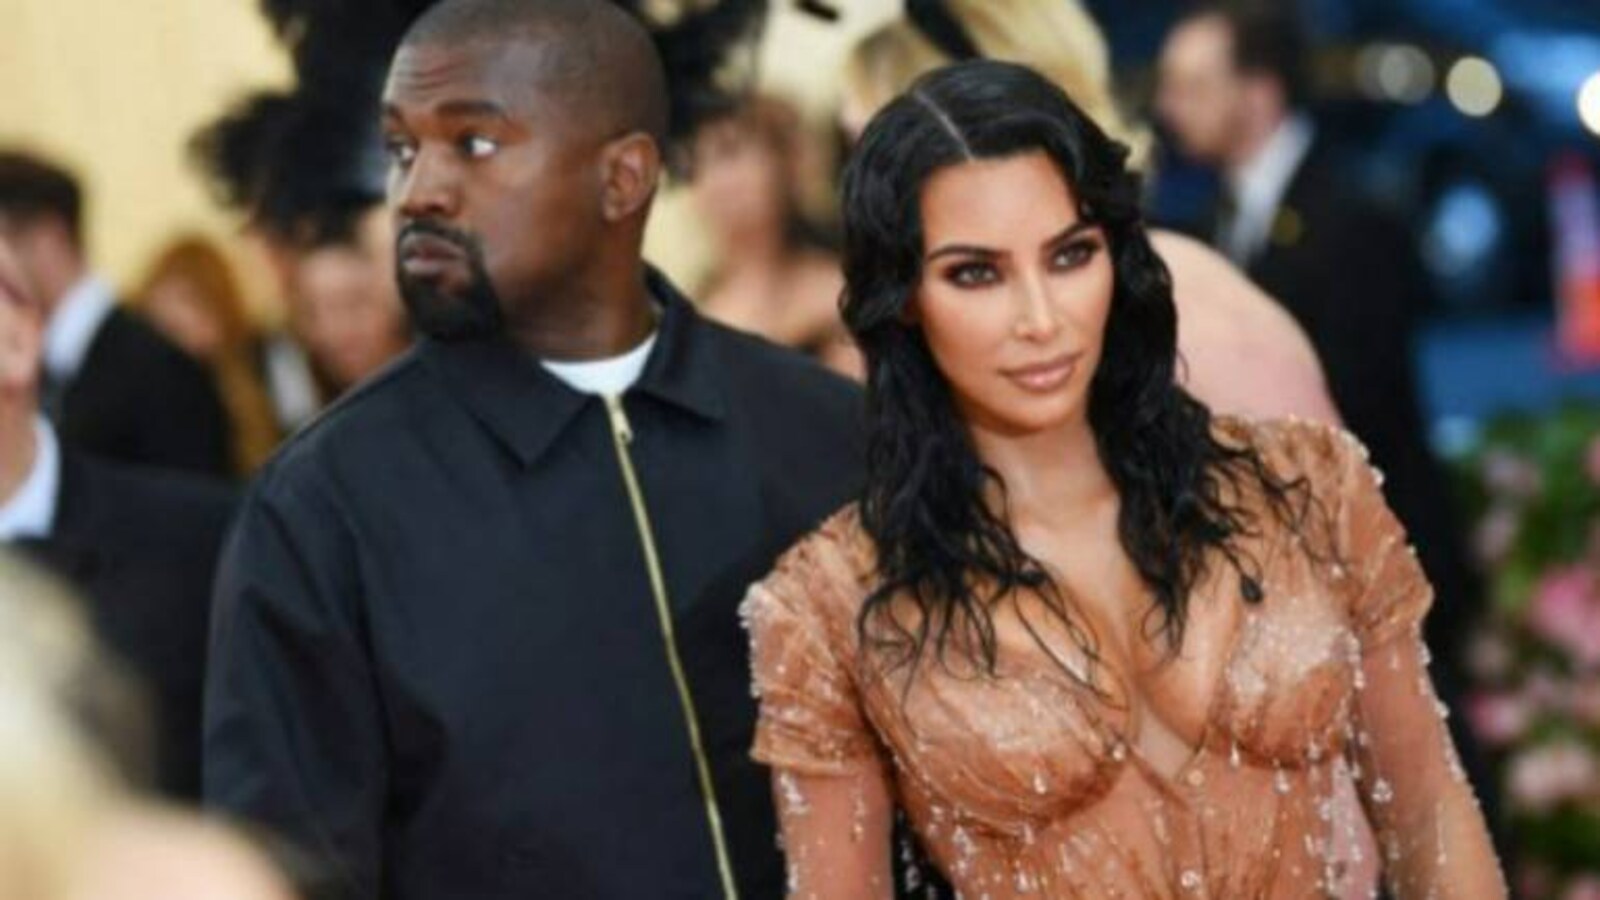 Kim Kardashian Pornograph Video 3gp - Kanye West showed explicit photos of Kim Kardashian to Adidas employees:  Report